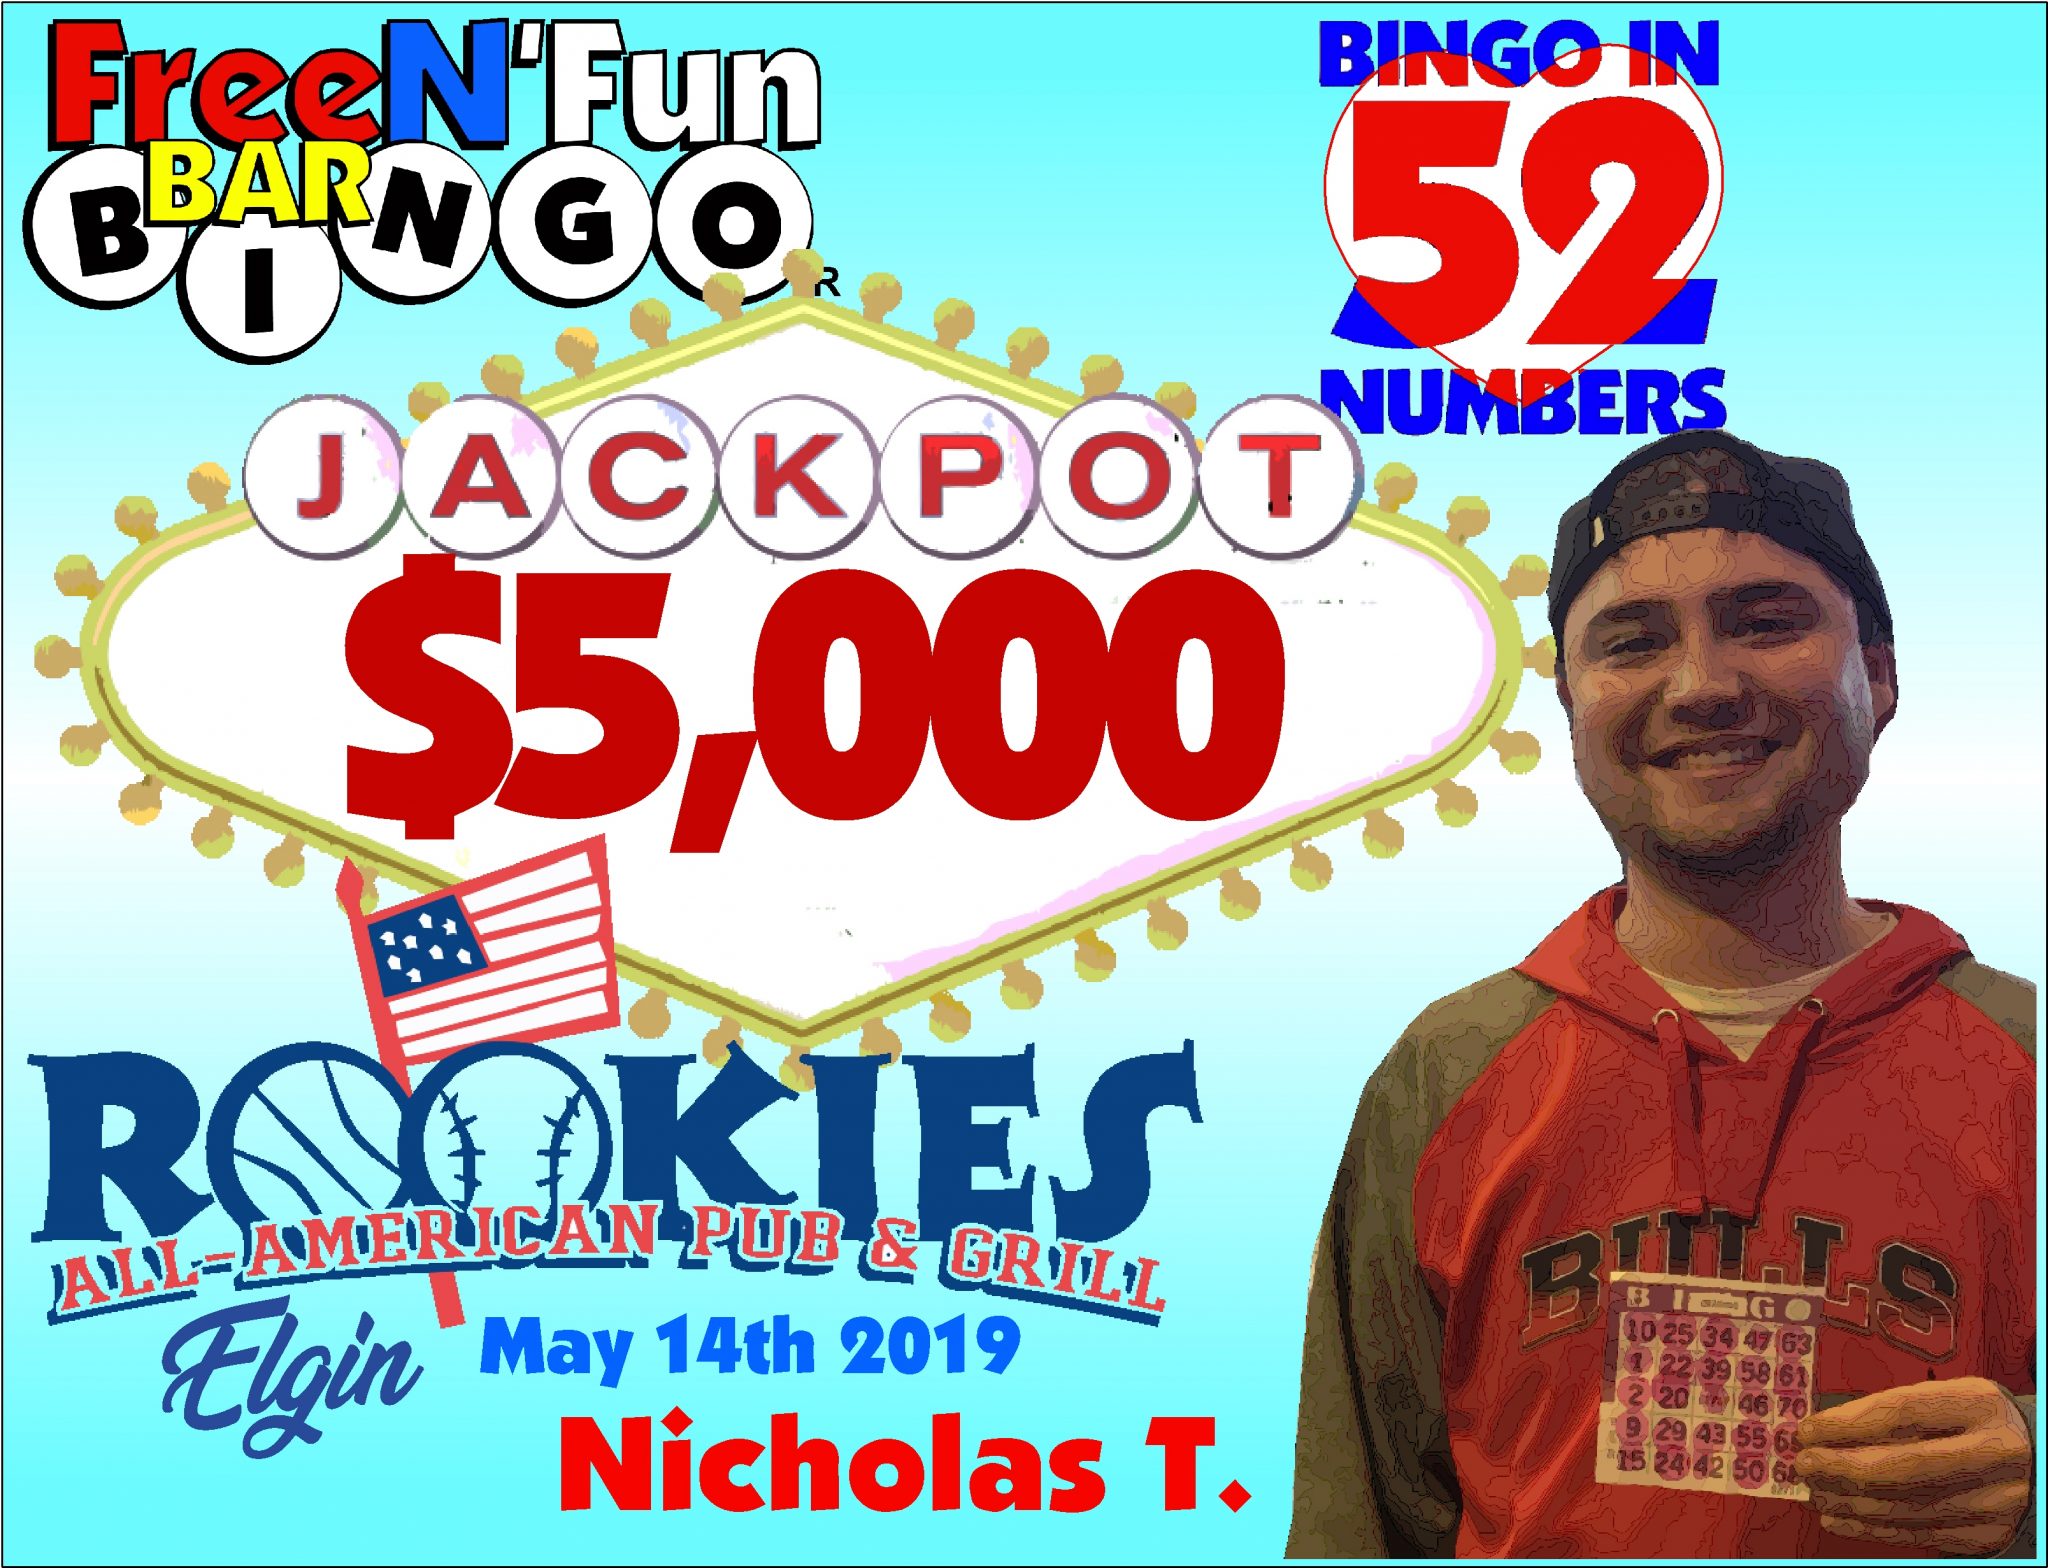 Jackpot Winner 2019 Nicholas